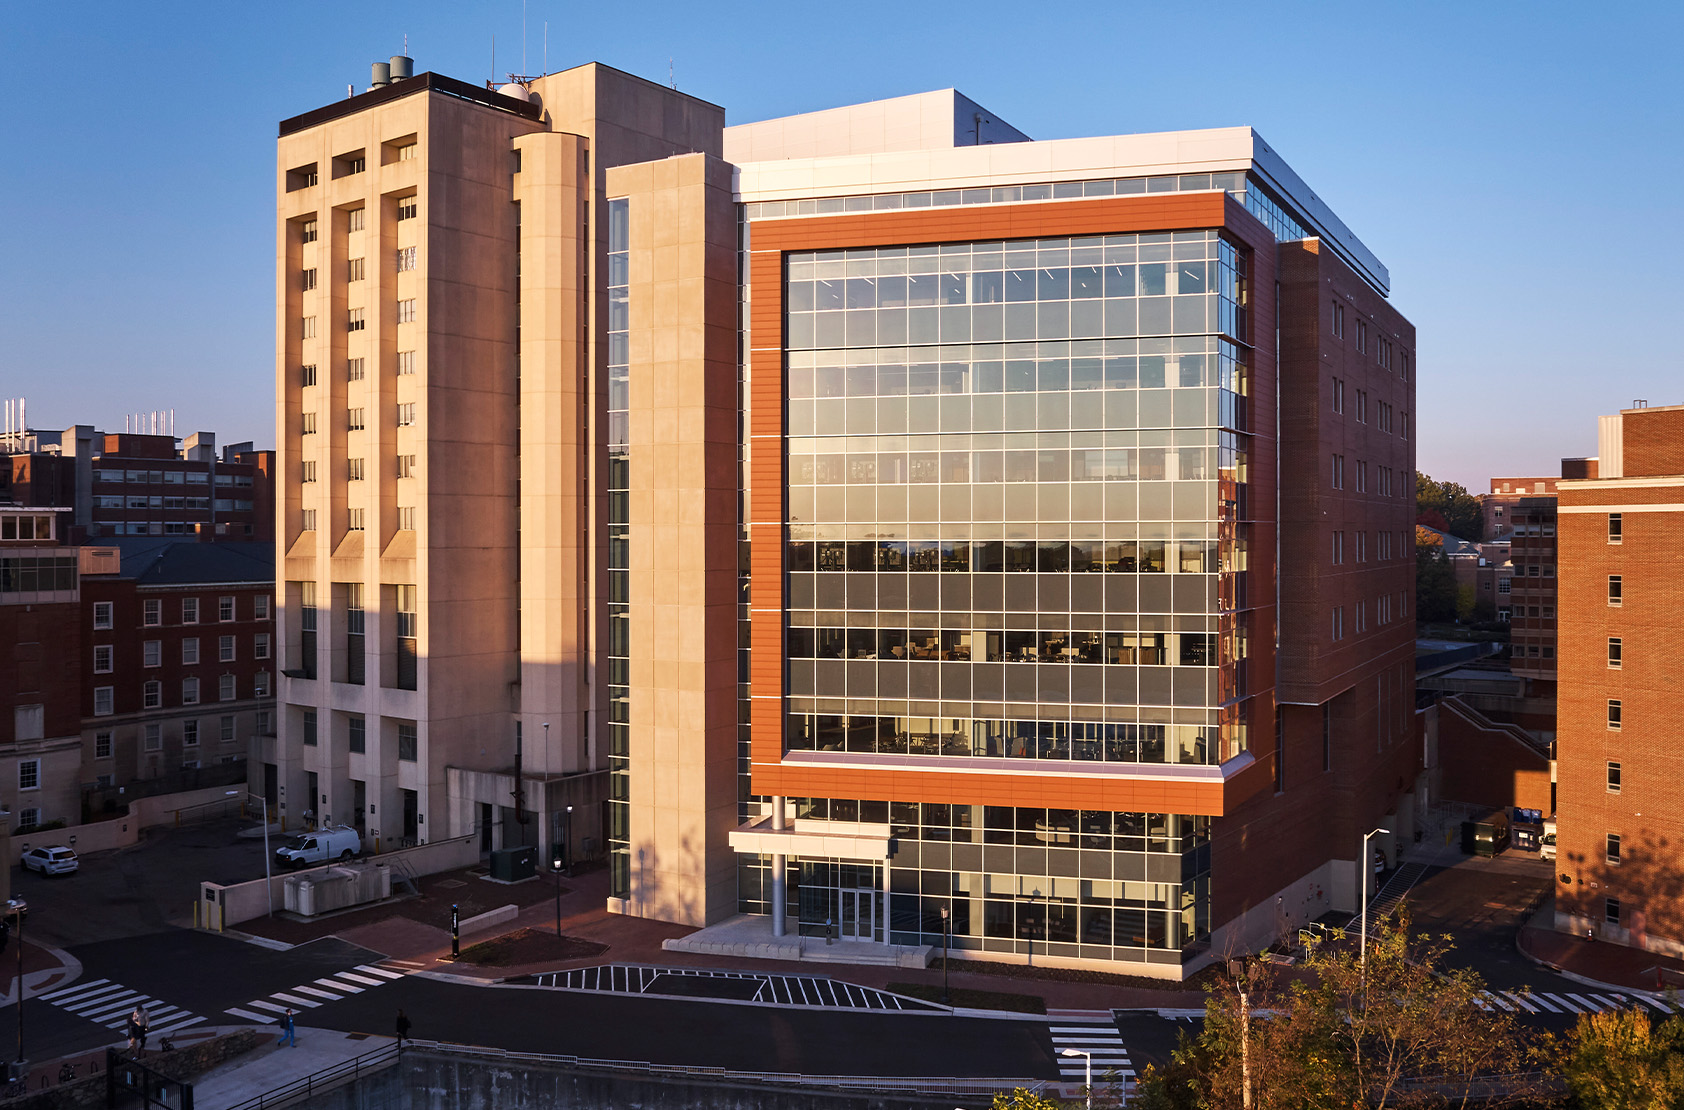 University
of North Carolina - School of Medicine, Roper Hall